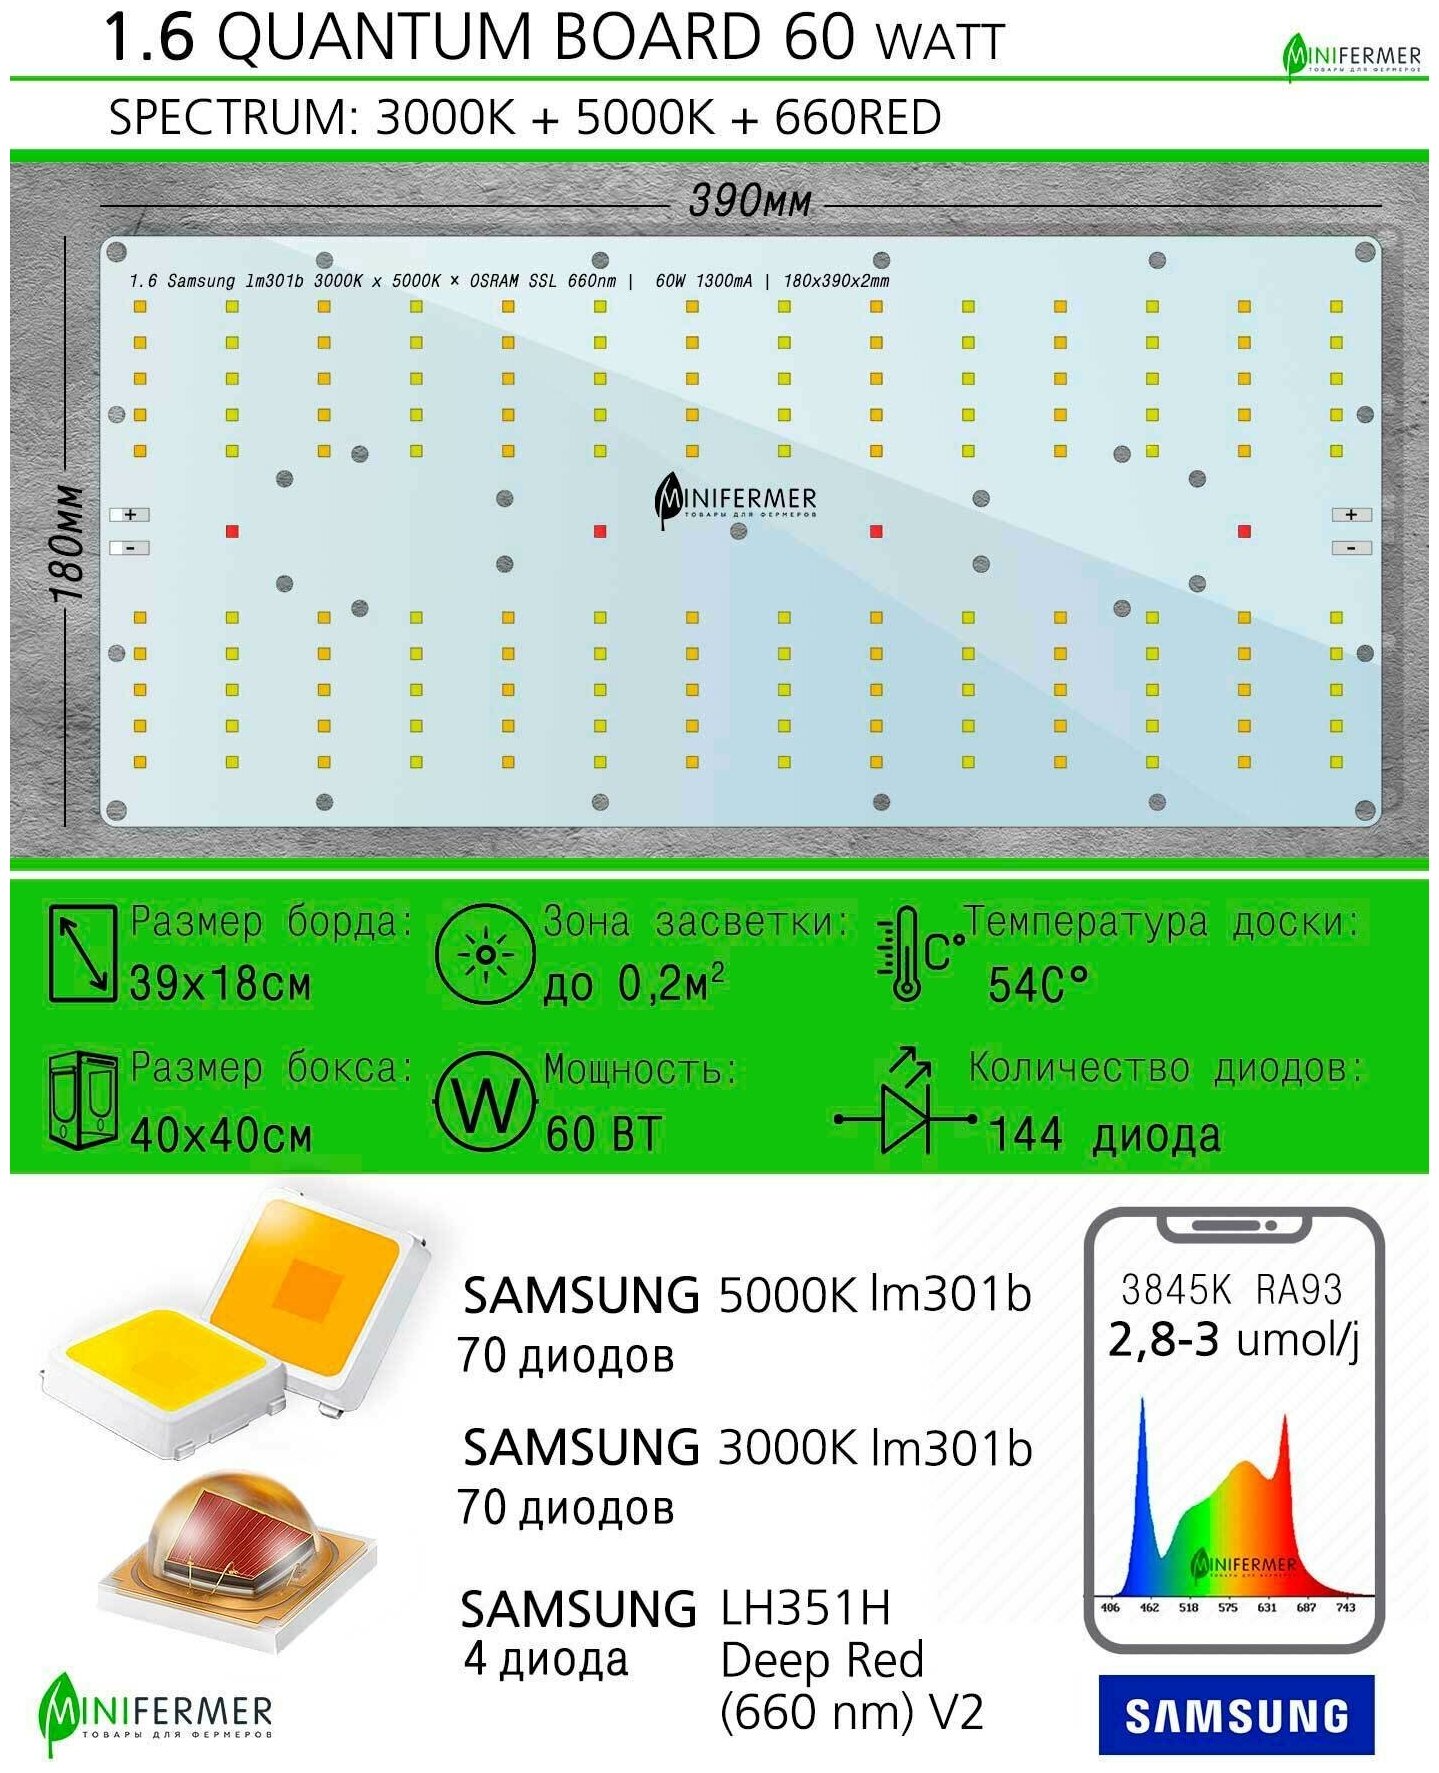 Квантум борд 1.6 Ultra Quantum board Samsung lm301b 3000K+5000K + Samsung lh351h 660nm, 60Вт 18х39см эконом драйвер - фотография № 7